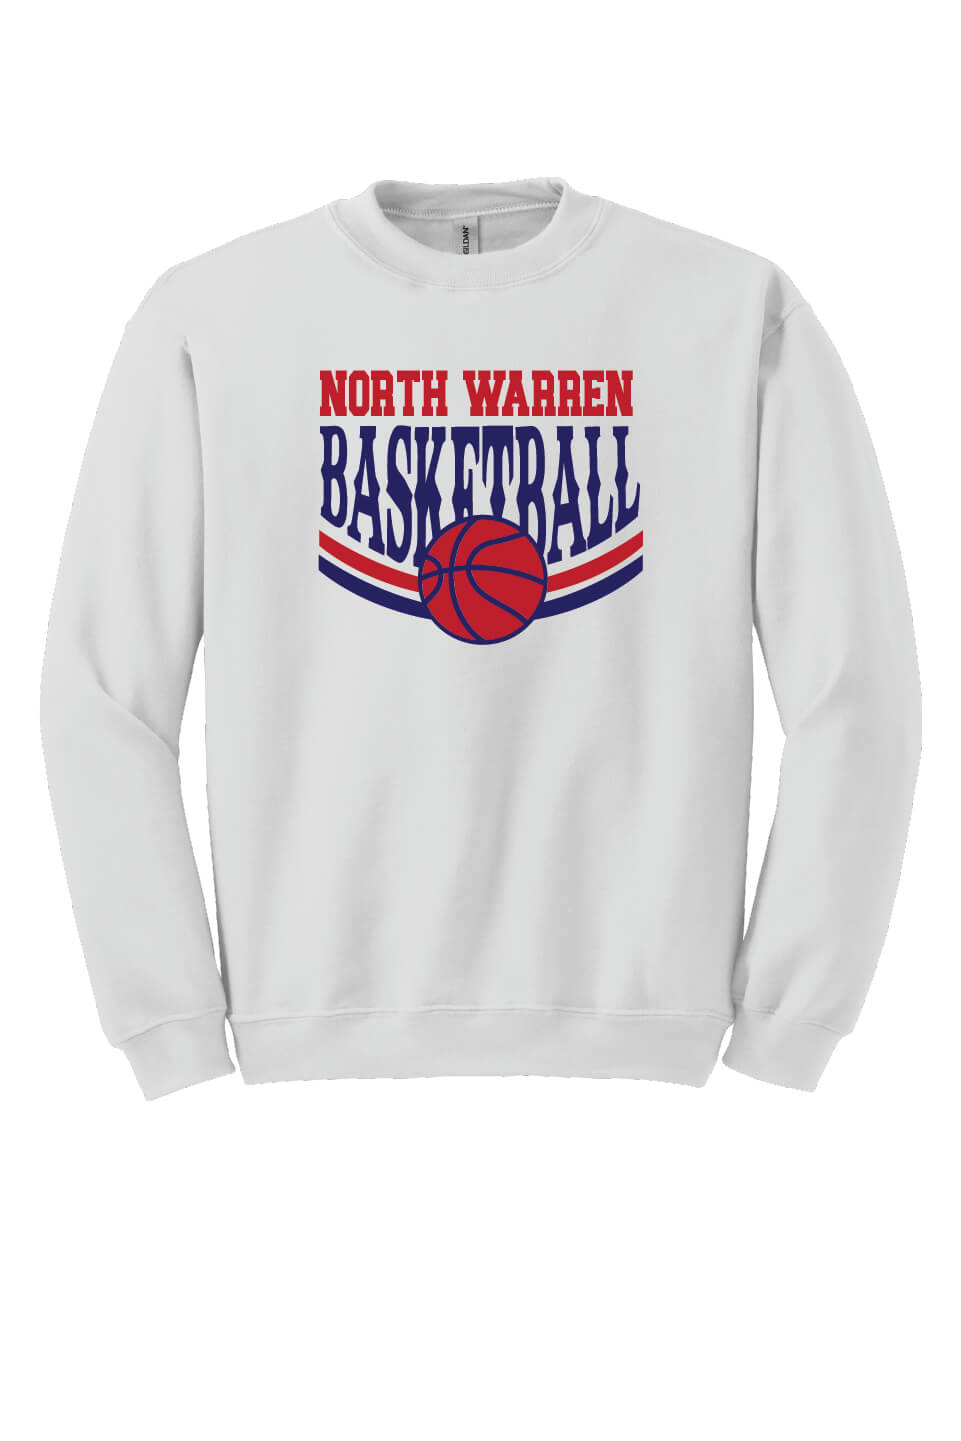 NW Basketball Crewneck Sweatshirt (Youth) white